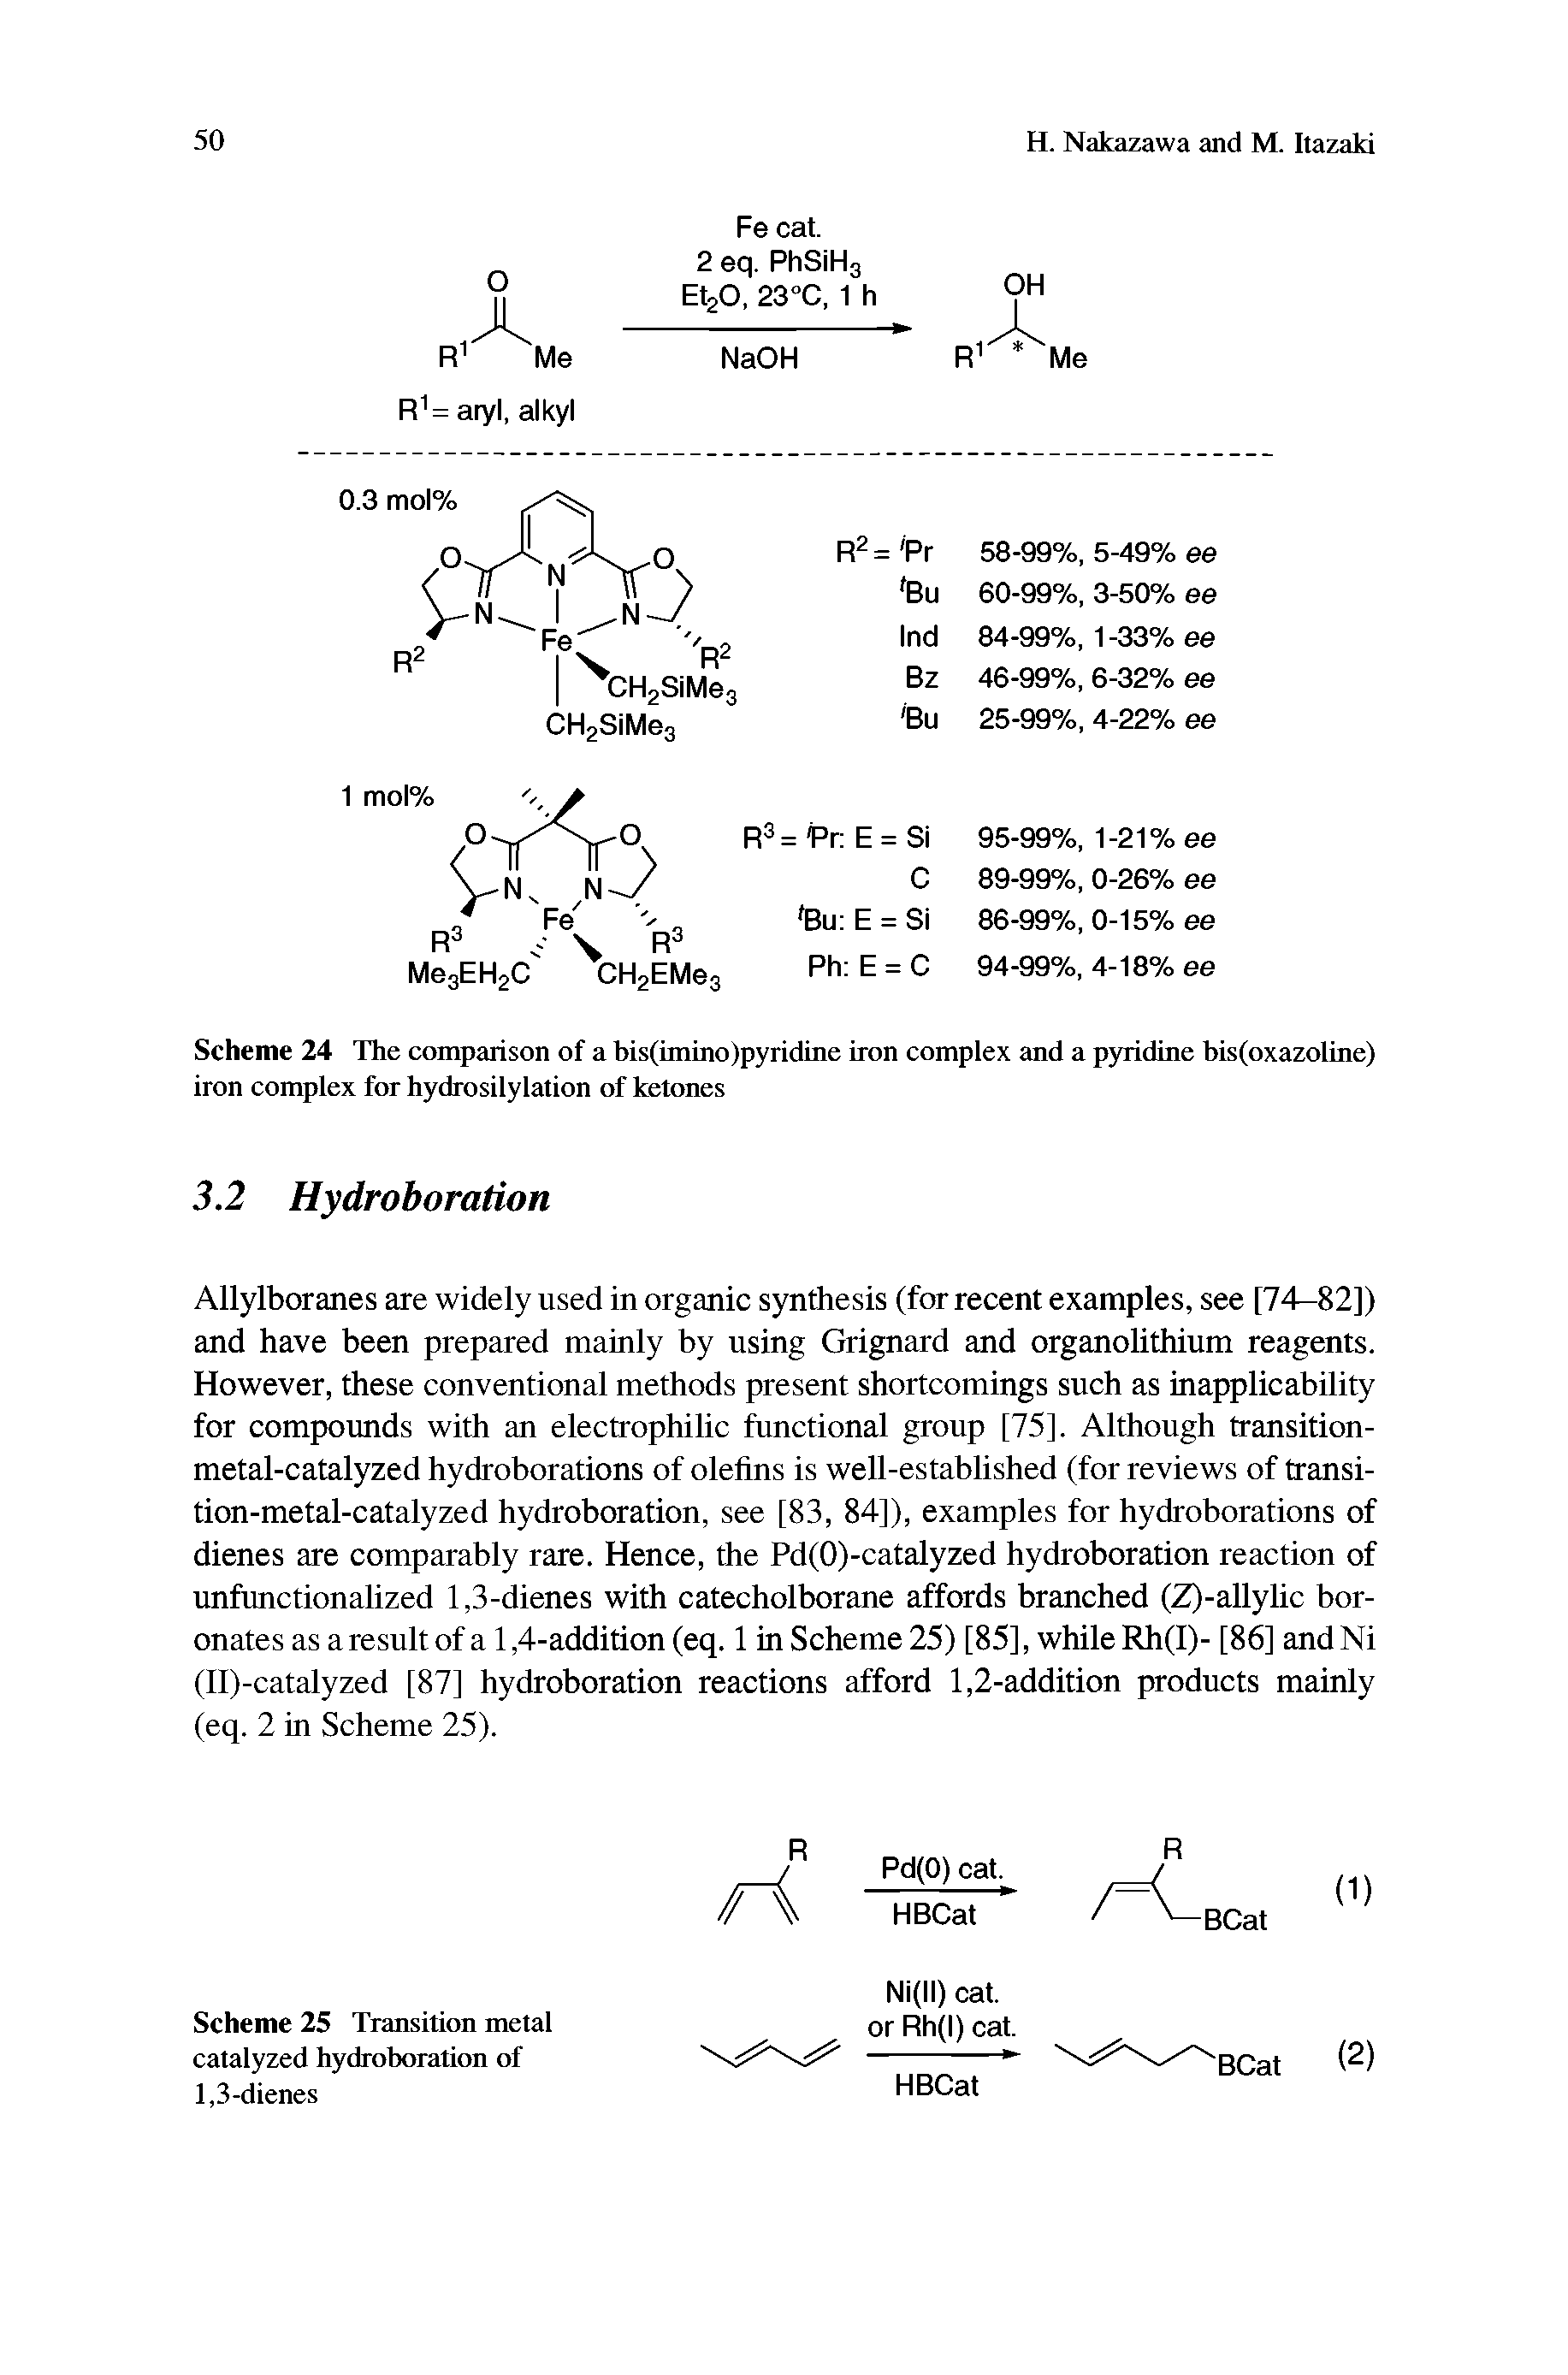 Scheme 24 The comparison of a bis(imino)pyridine iron complex and a pyridine bis(oxazoline) iron complex for hydrosilylation of ketones...